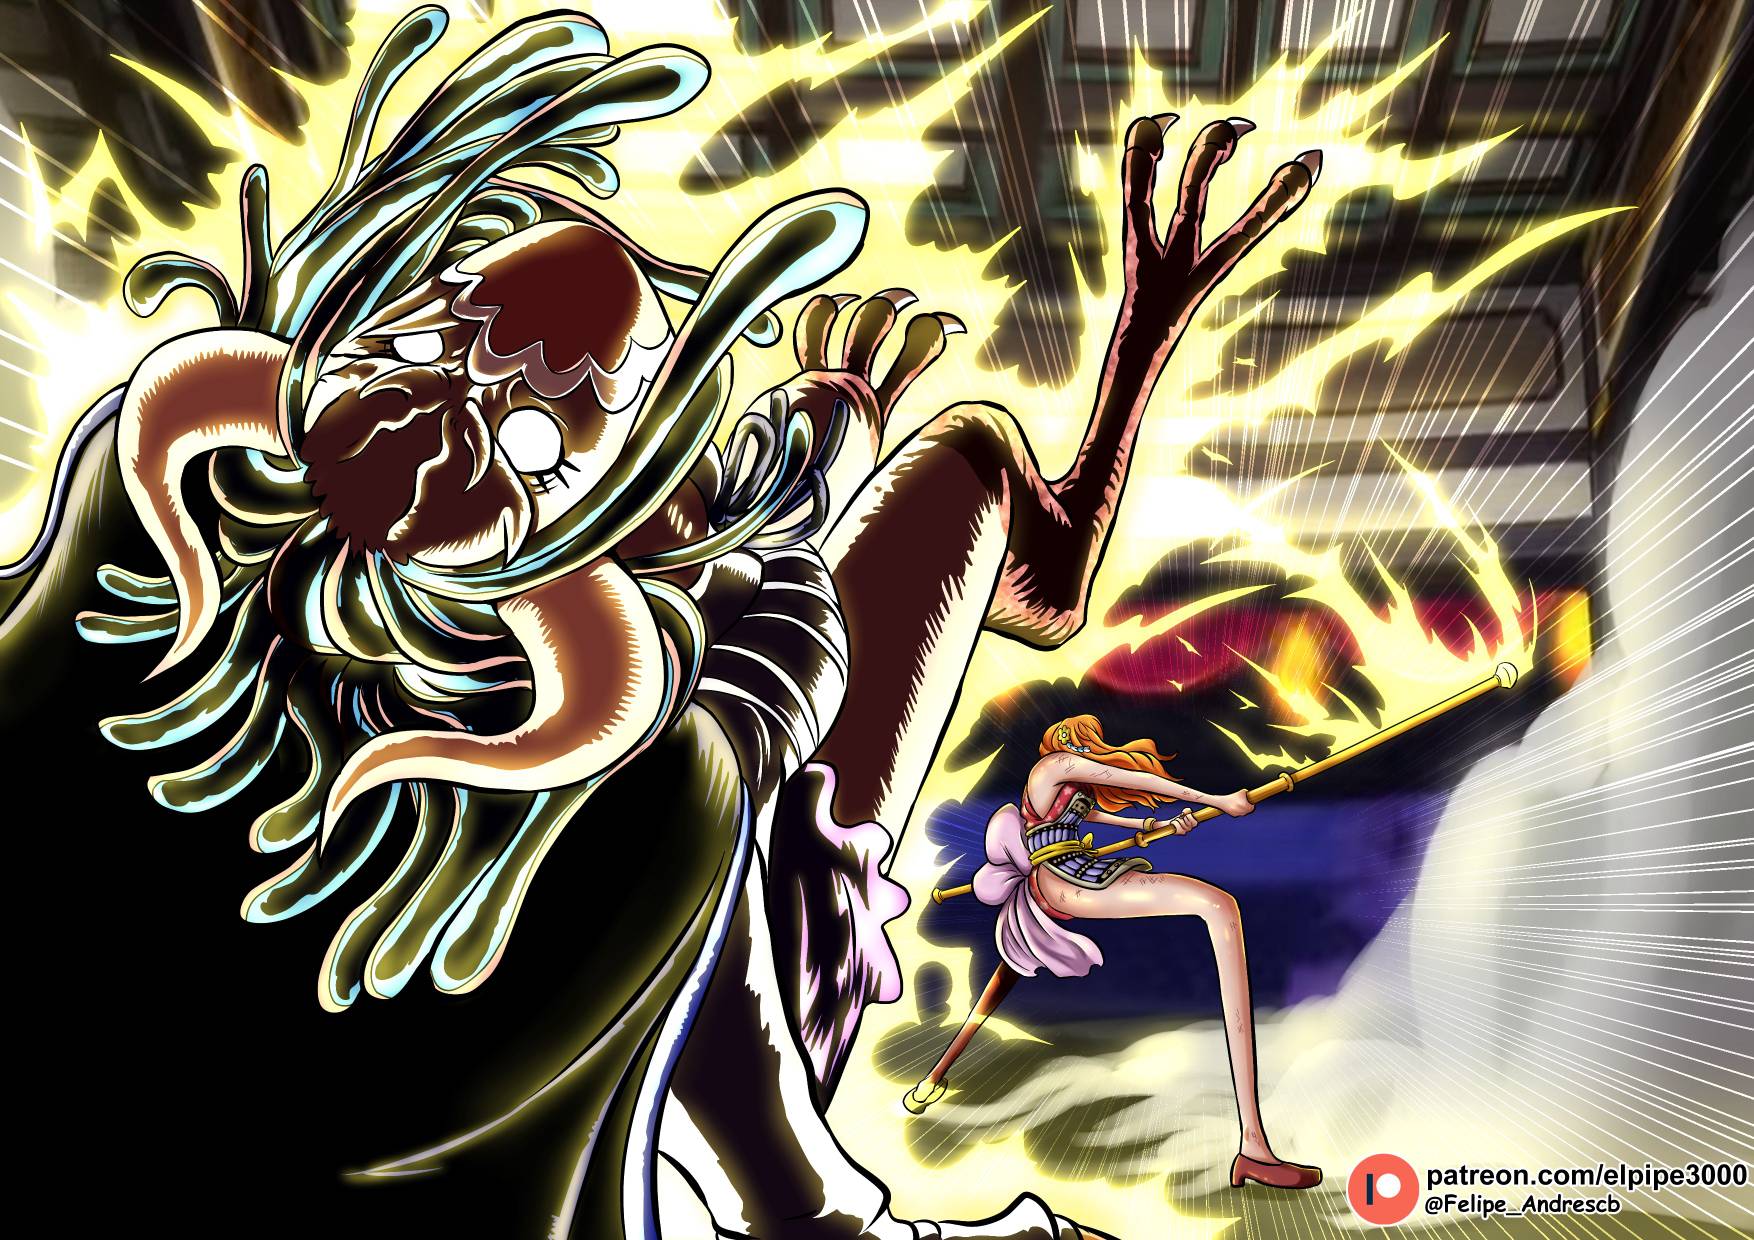 Nami VS Ulti - One Piece ep 1008 by Berg-anime on DeviantArt